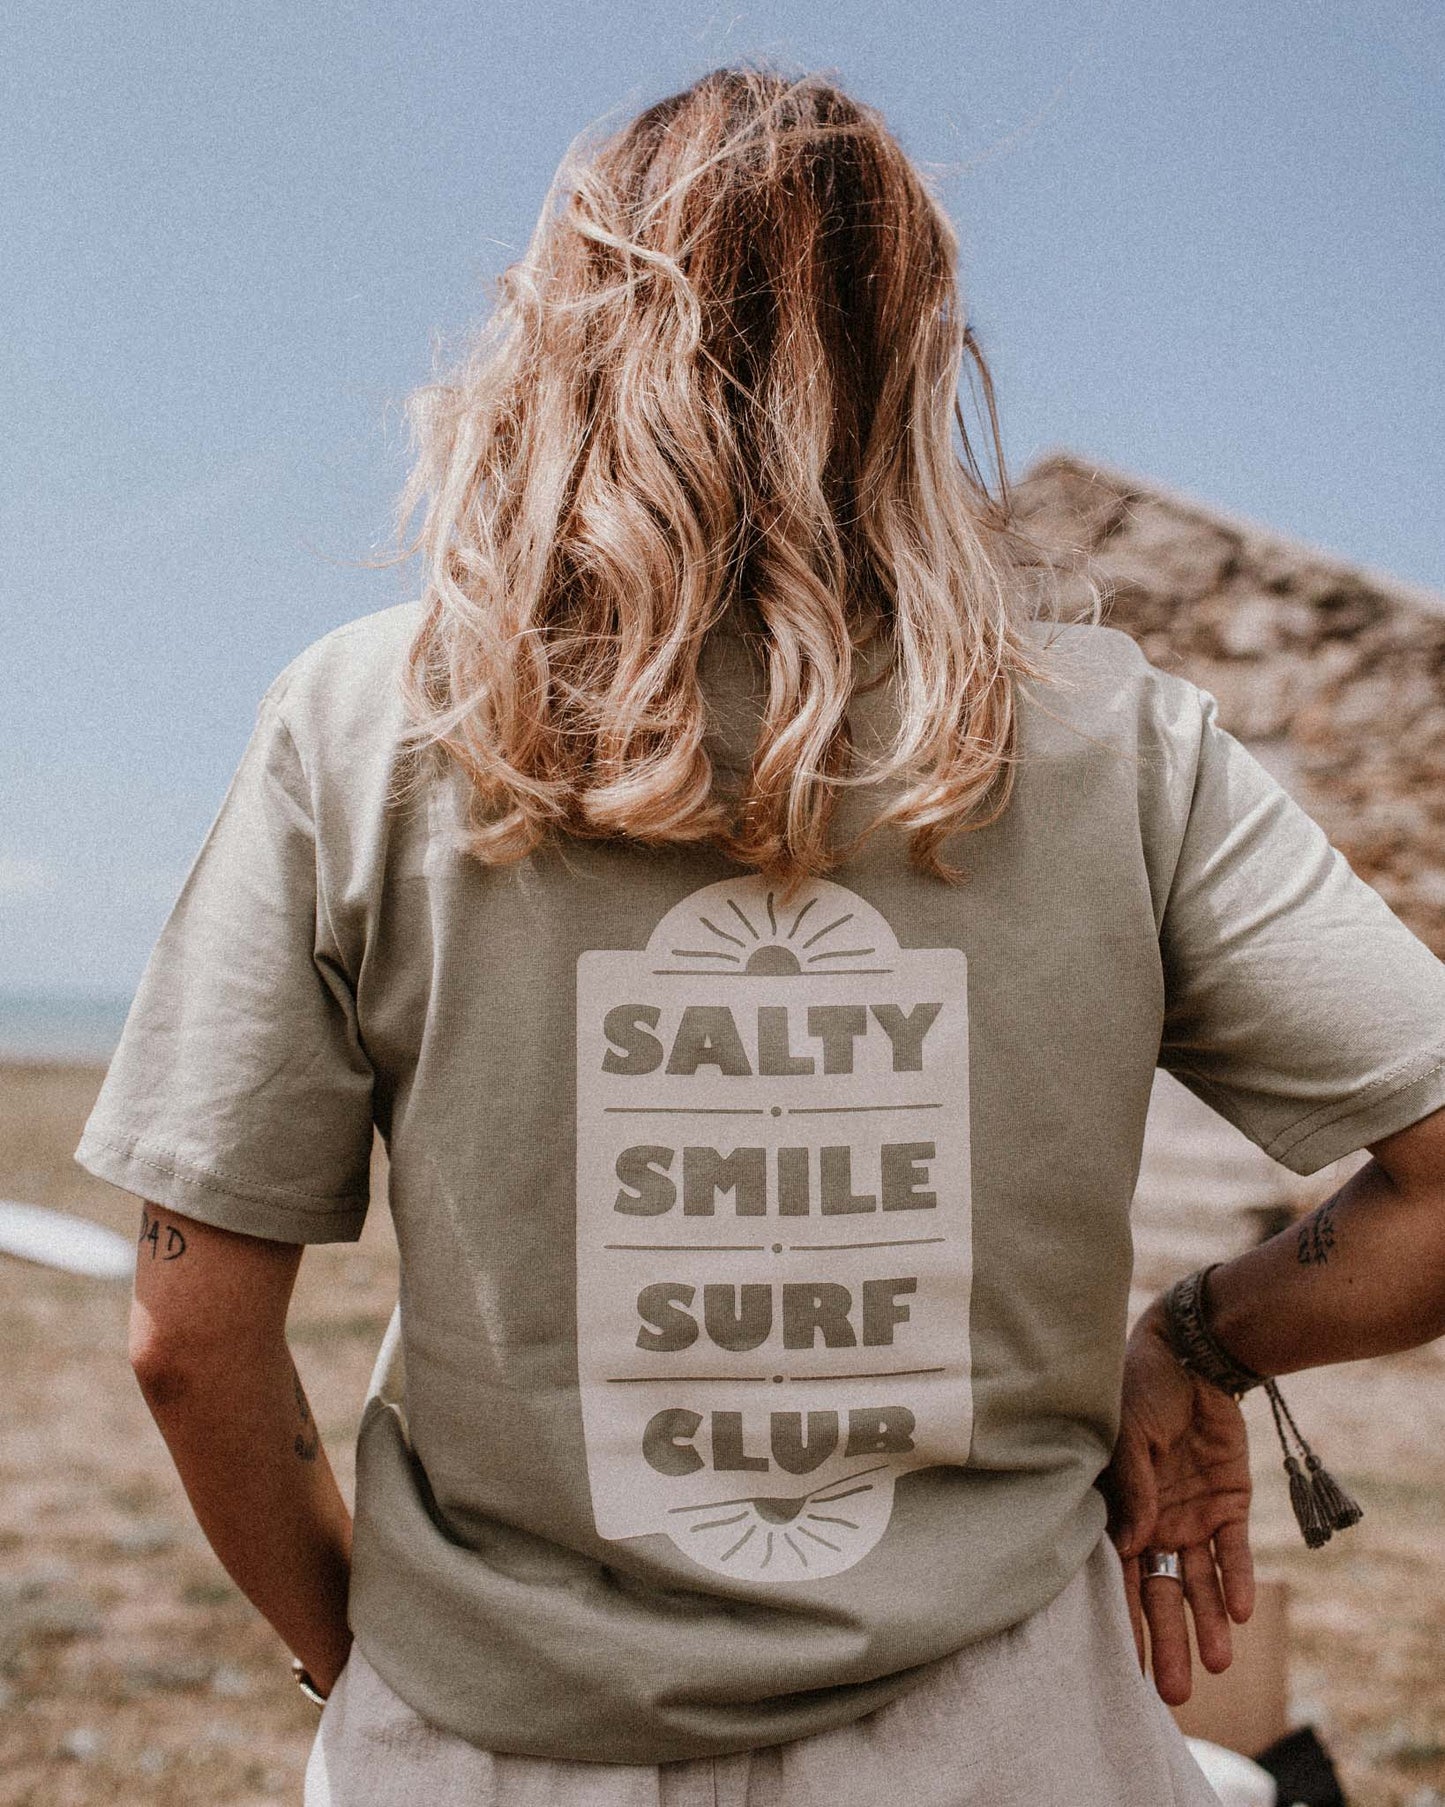 vetements surf salty smile SURFCLUB T SHIRT marque eco responsable